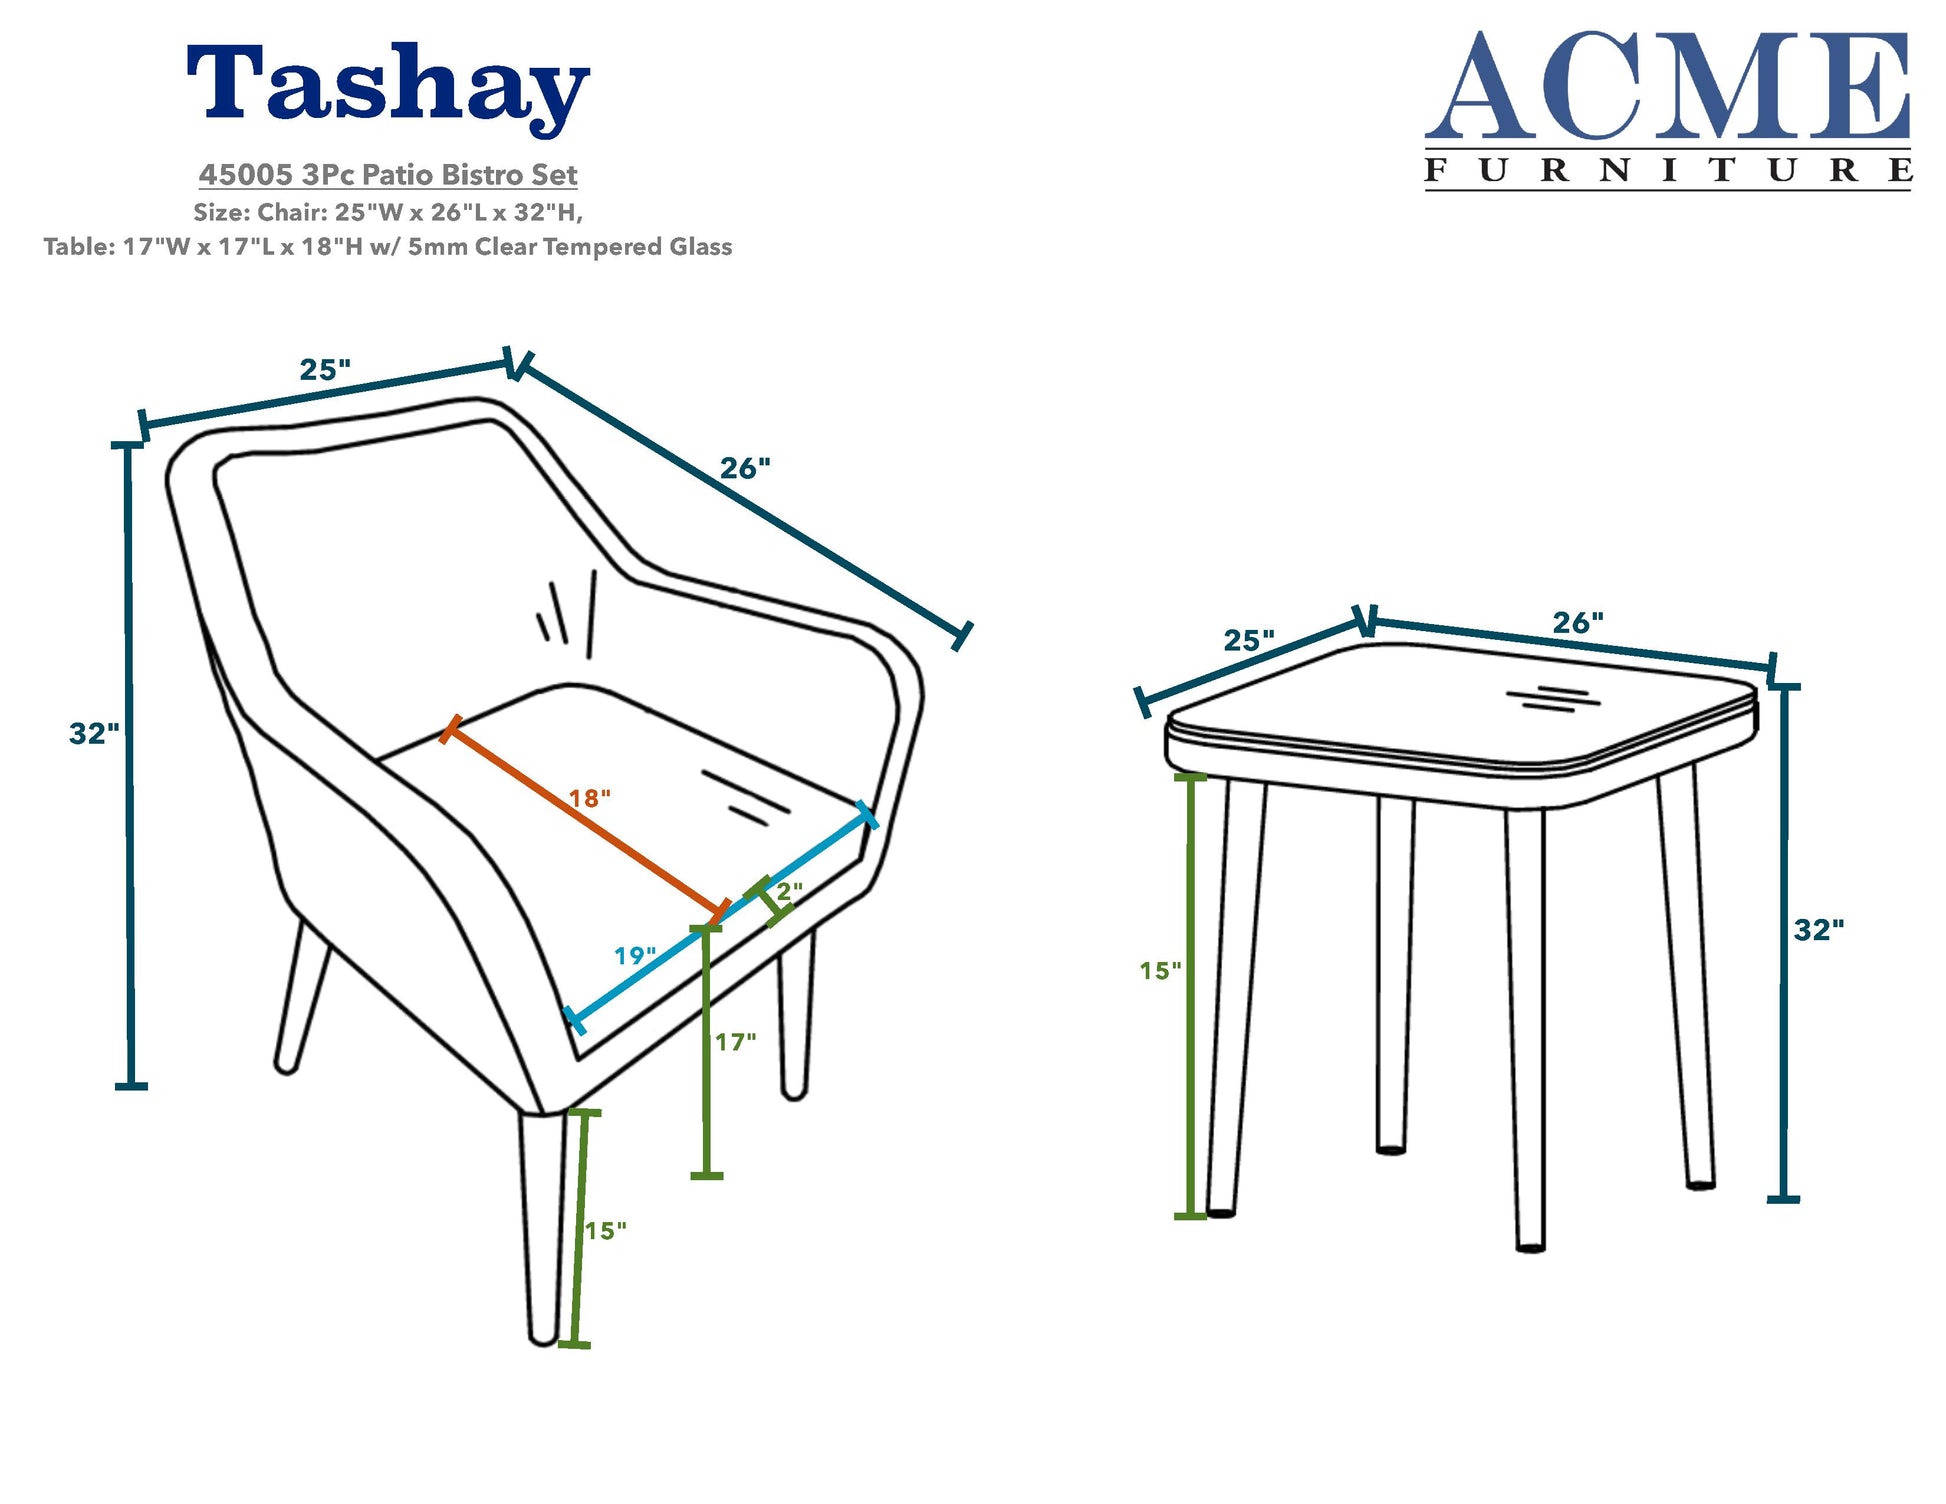 ACME Tashay Patio Bistro Set 3Pc in Green Fabric & Beige Wicker 45005